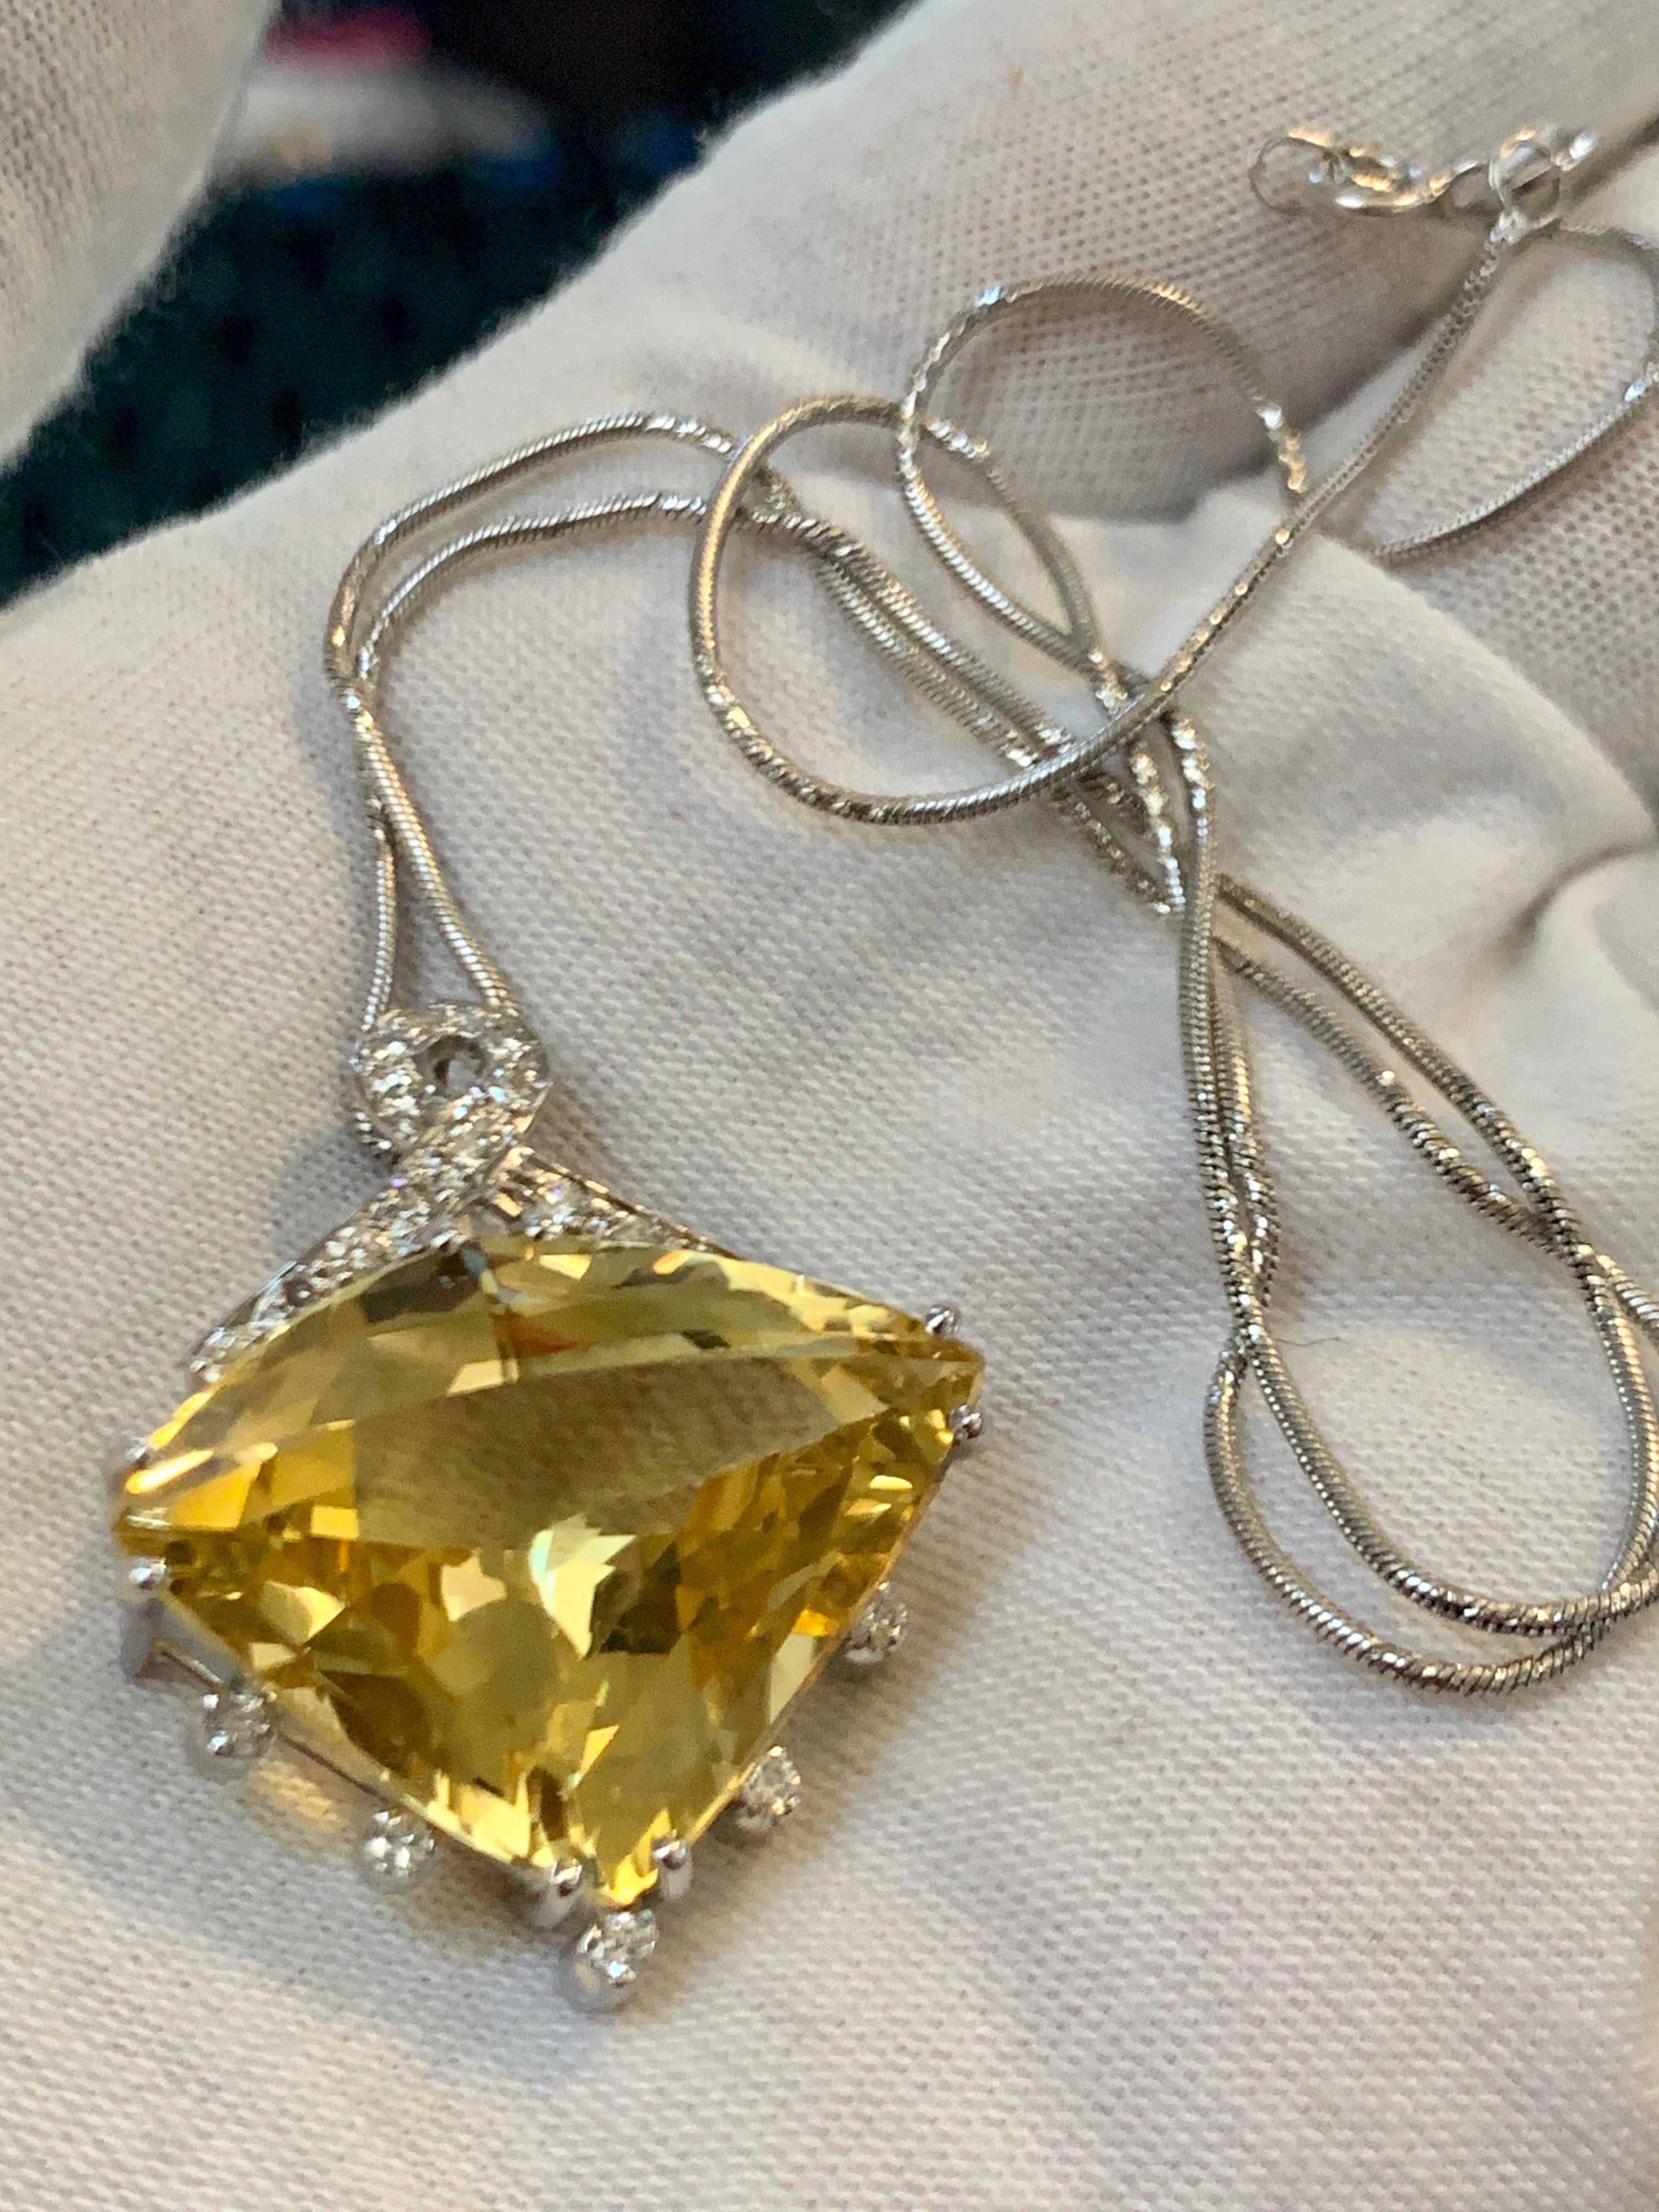 21 Carat Lemon Topaz and Diamond Pendant Necklace Enhancer, 18 Karat White Gold 1